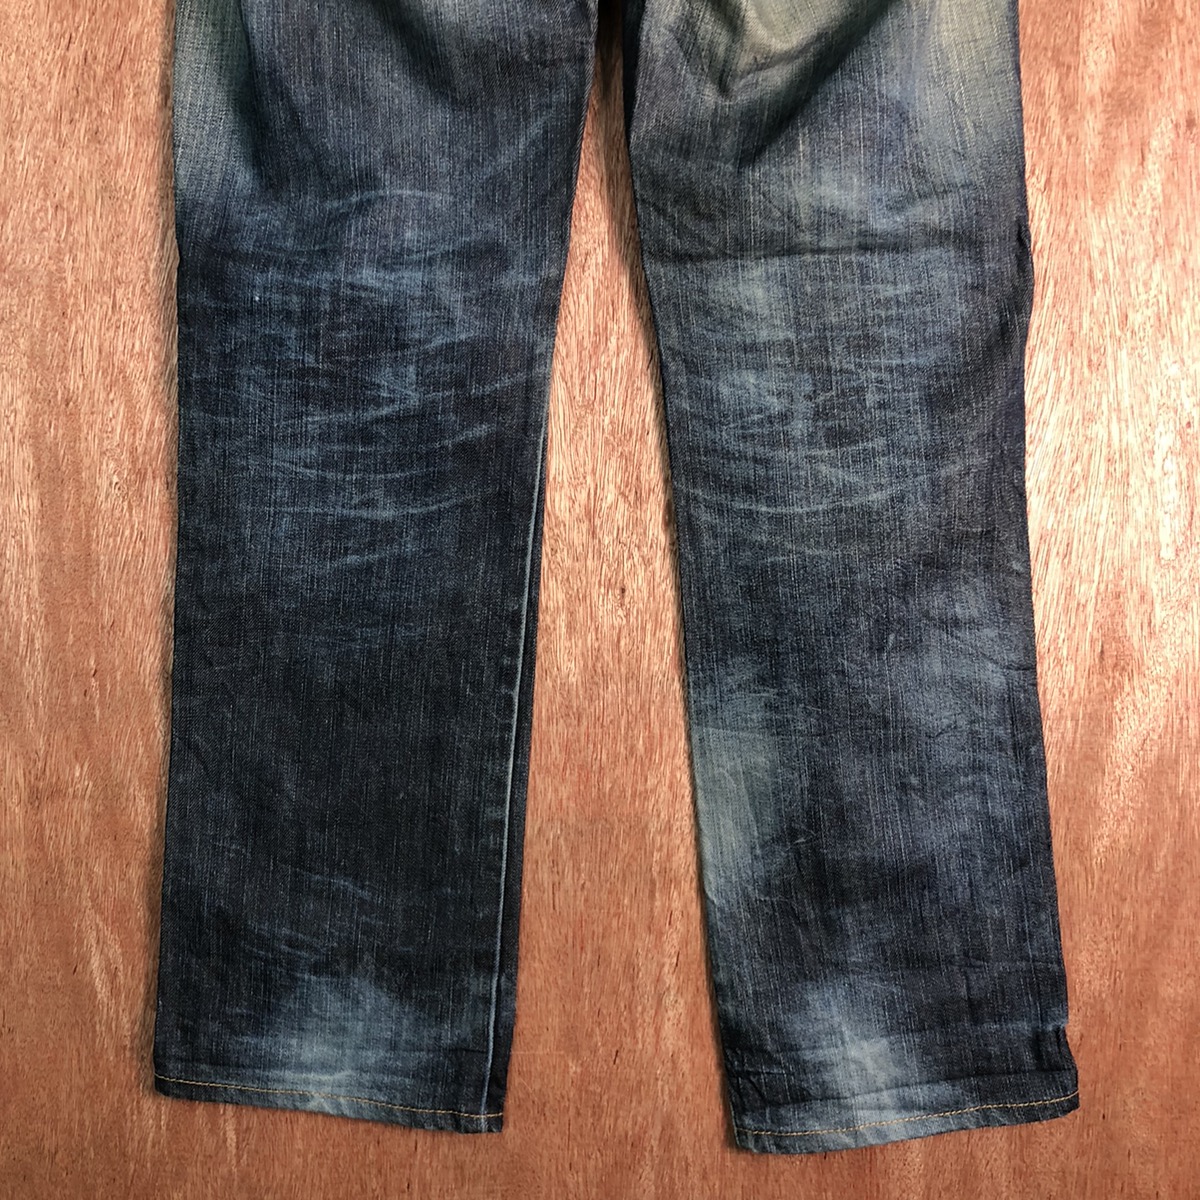 Nudie Jeans Co Blue Denim Jeans Pants #c139 - 3